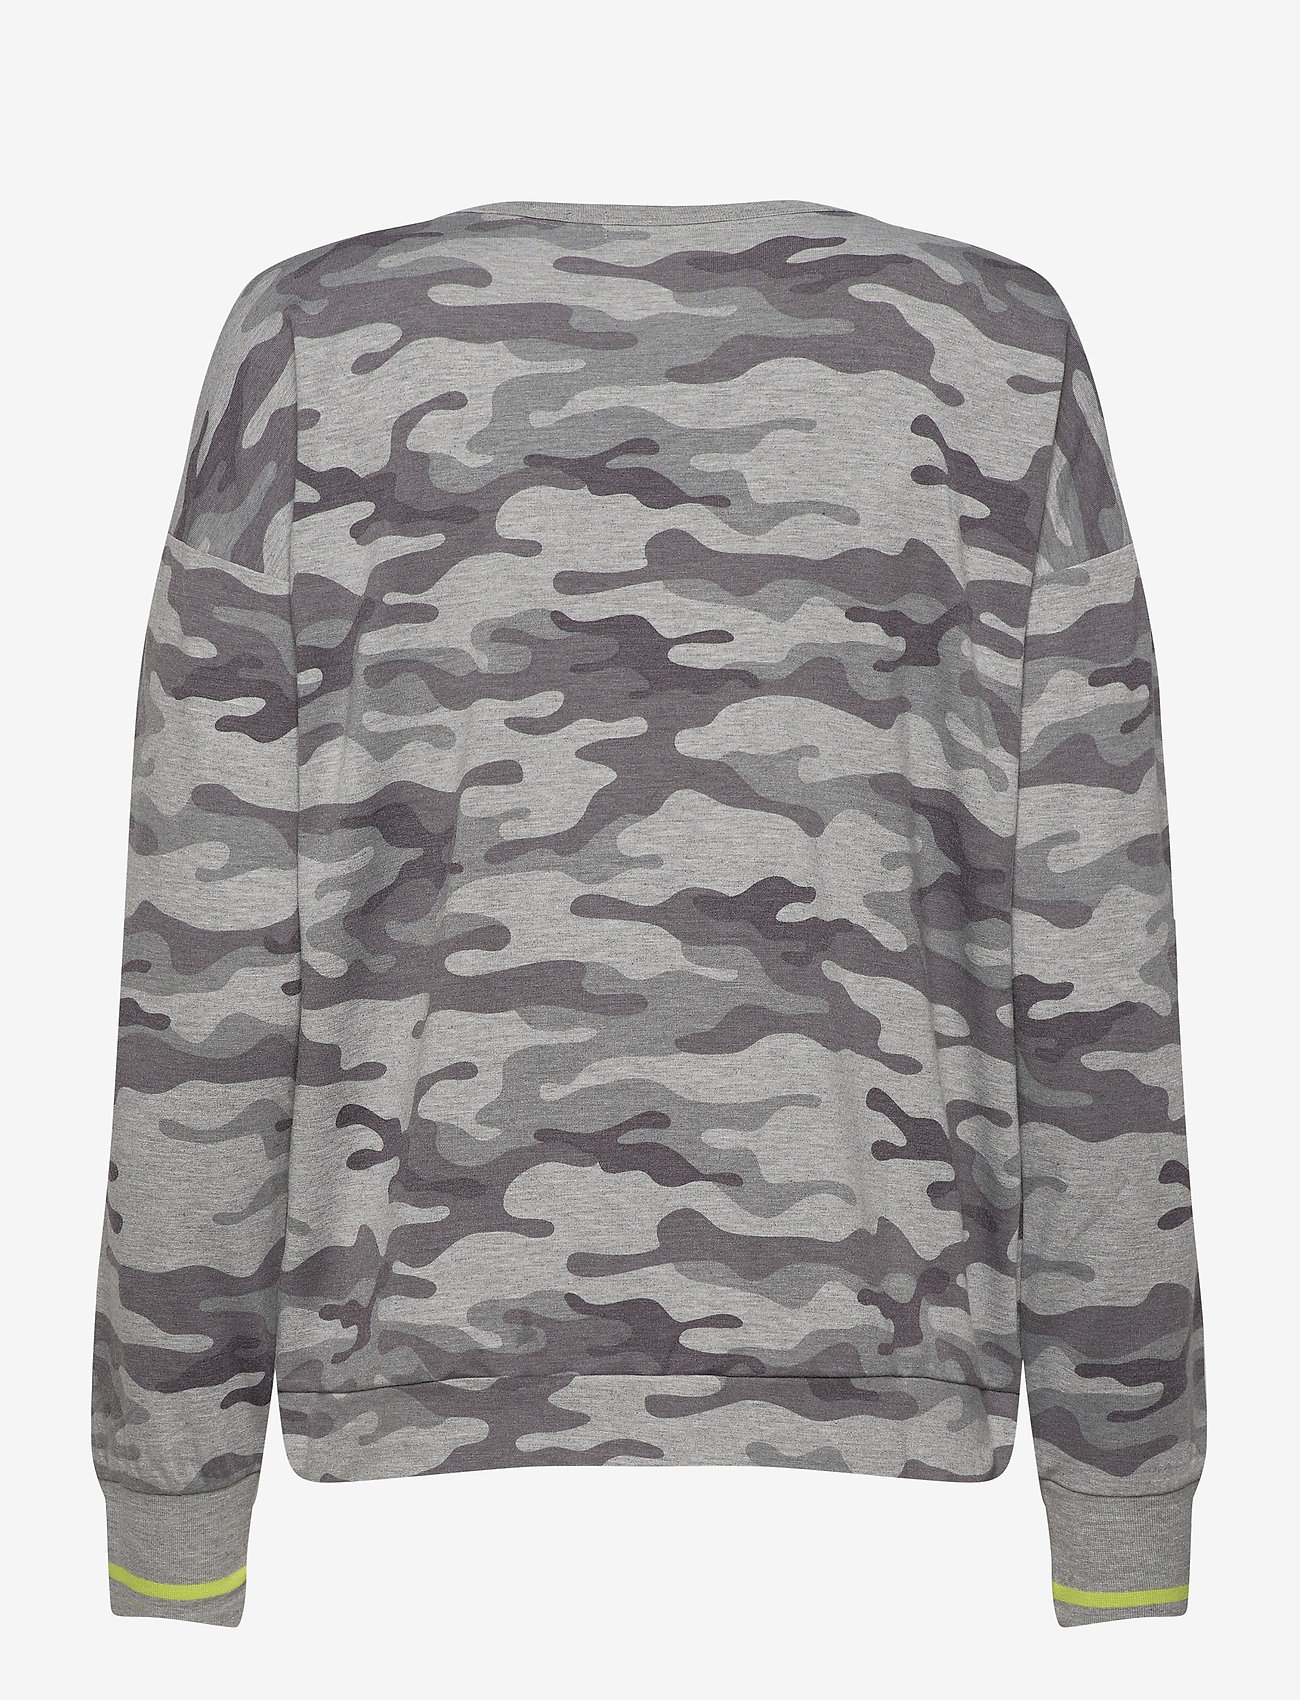 PJ Salvage - l/s shirt - oberteile - grey - 1